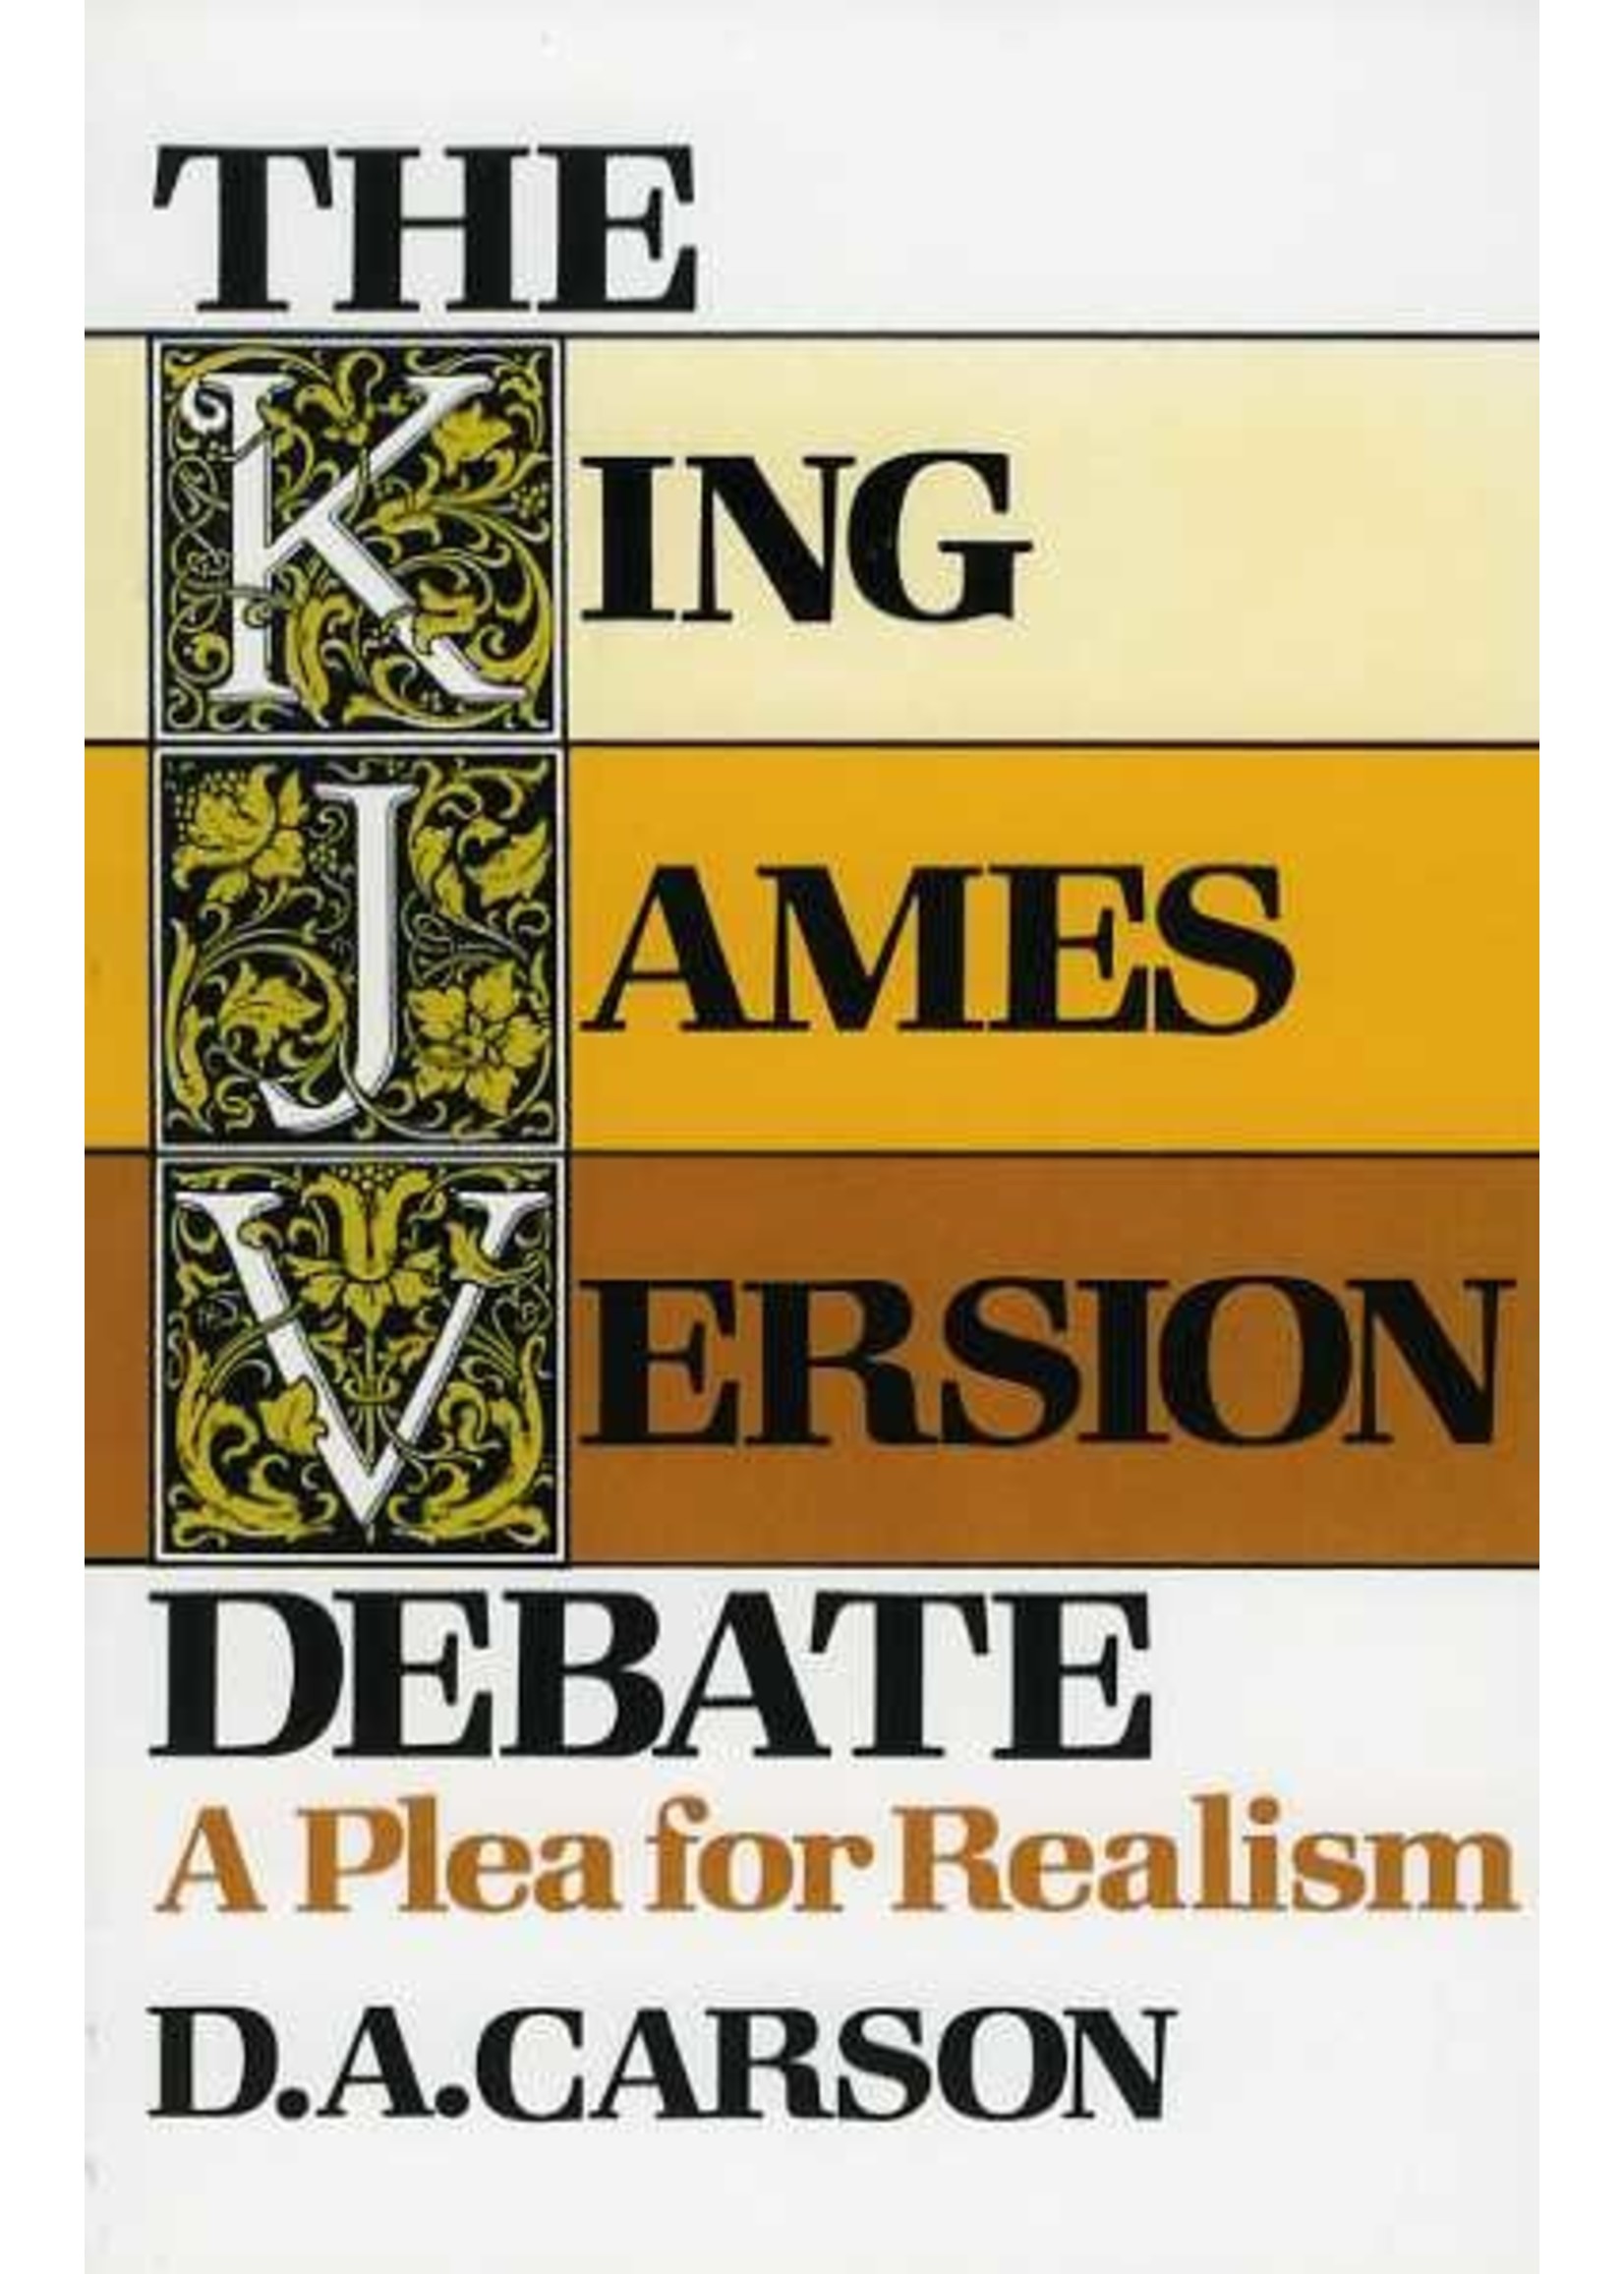 Baker Publishing The King James Version Debate - D. A. Carson